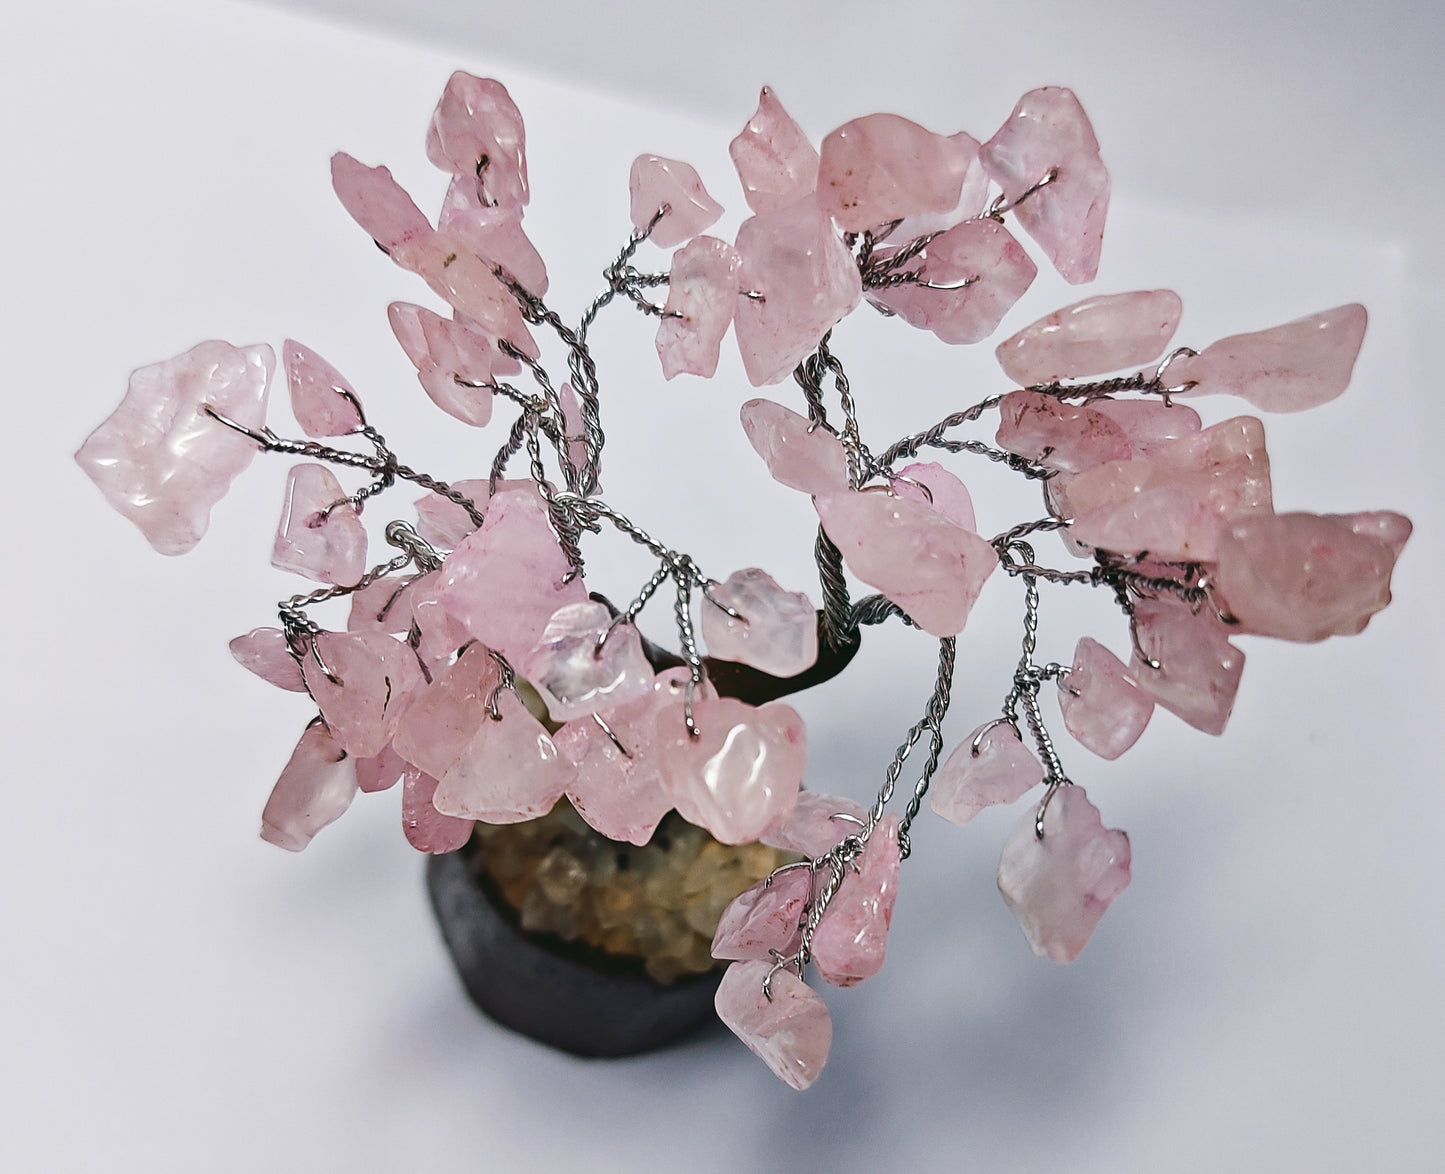 Crystal Rose Quartz Tree - Small